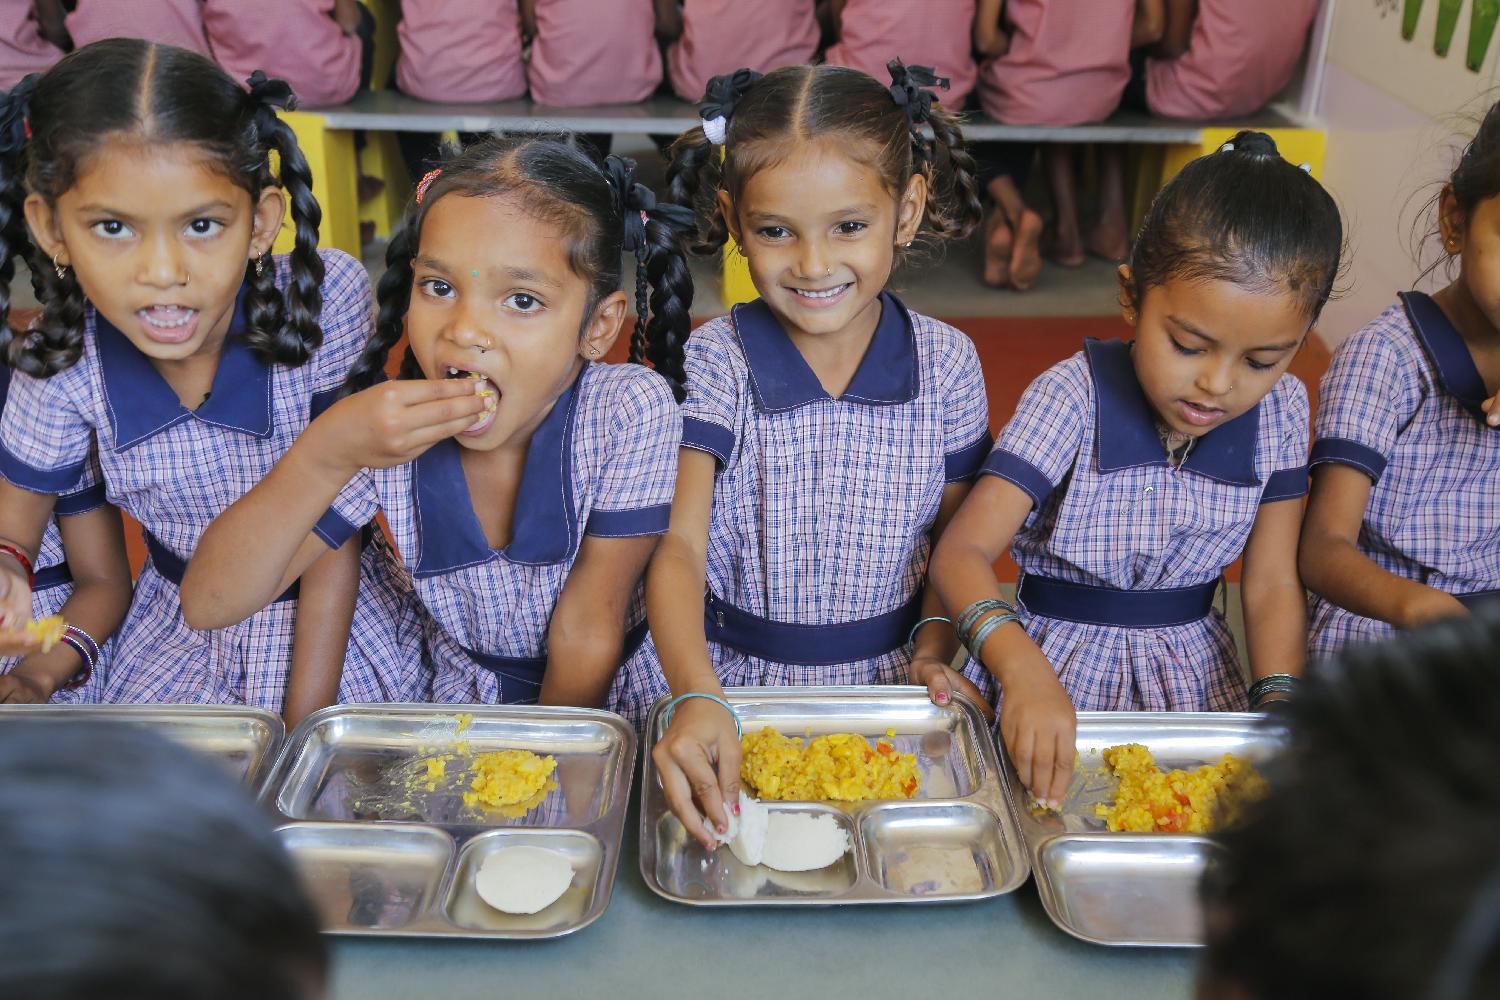 Feeding 1.8 million children a day across India.